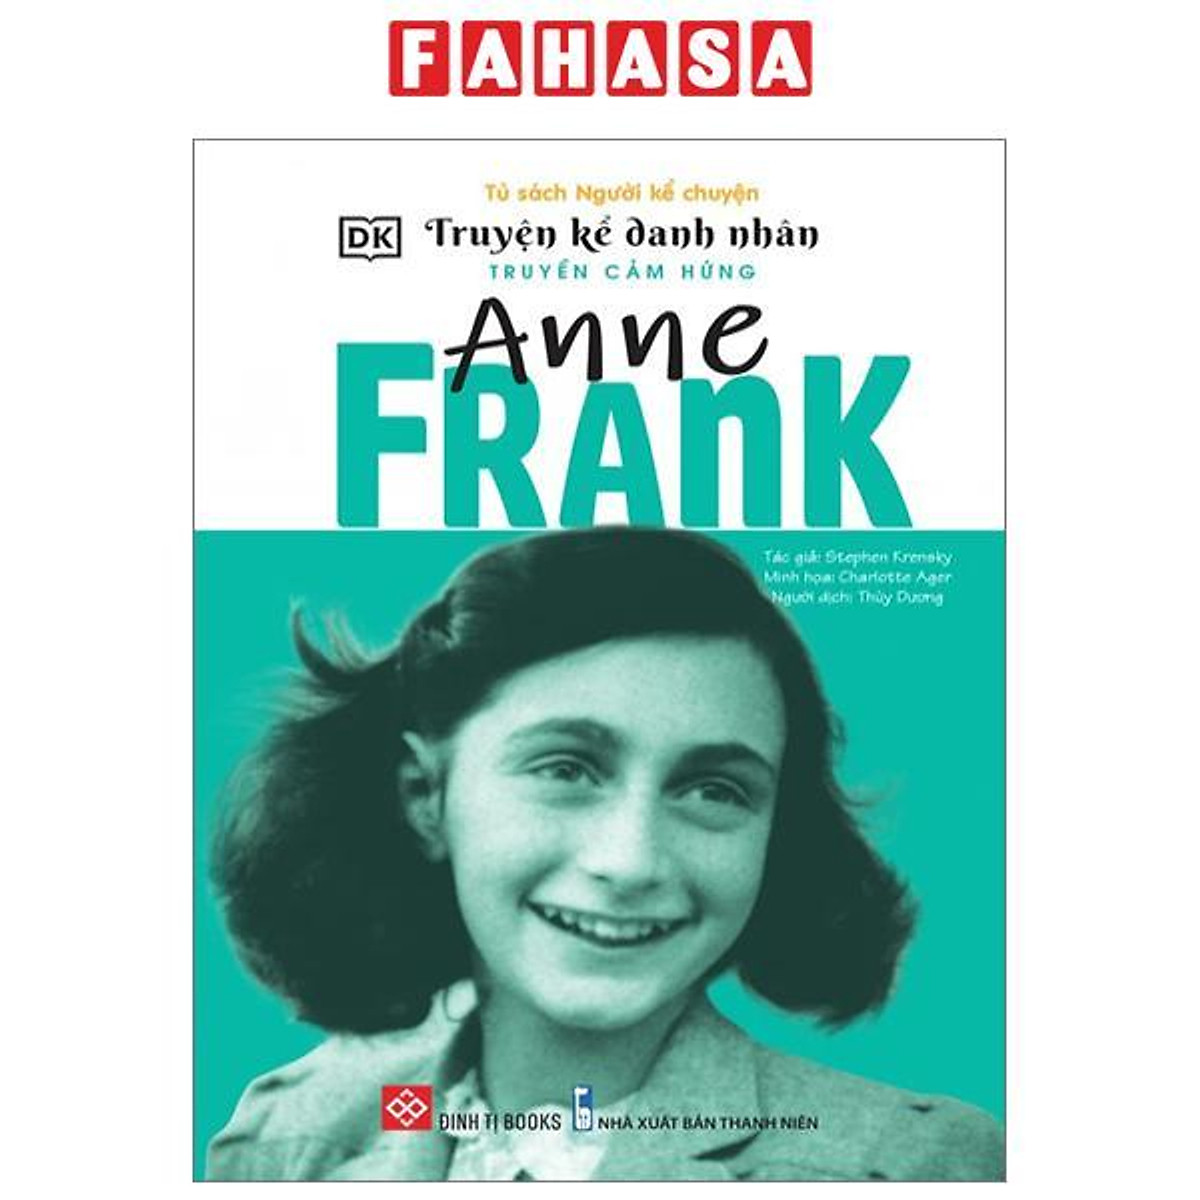 Truyện kể danh nhân truyền cảm hứng - Anne Frank